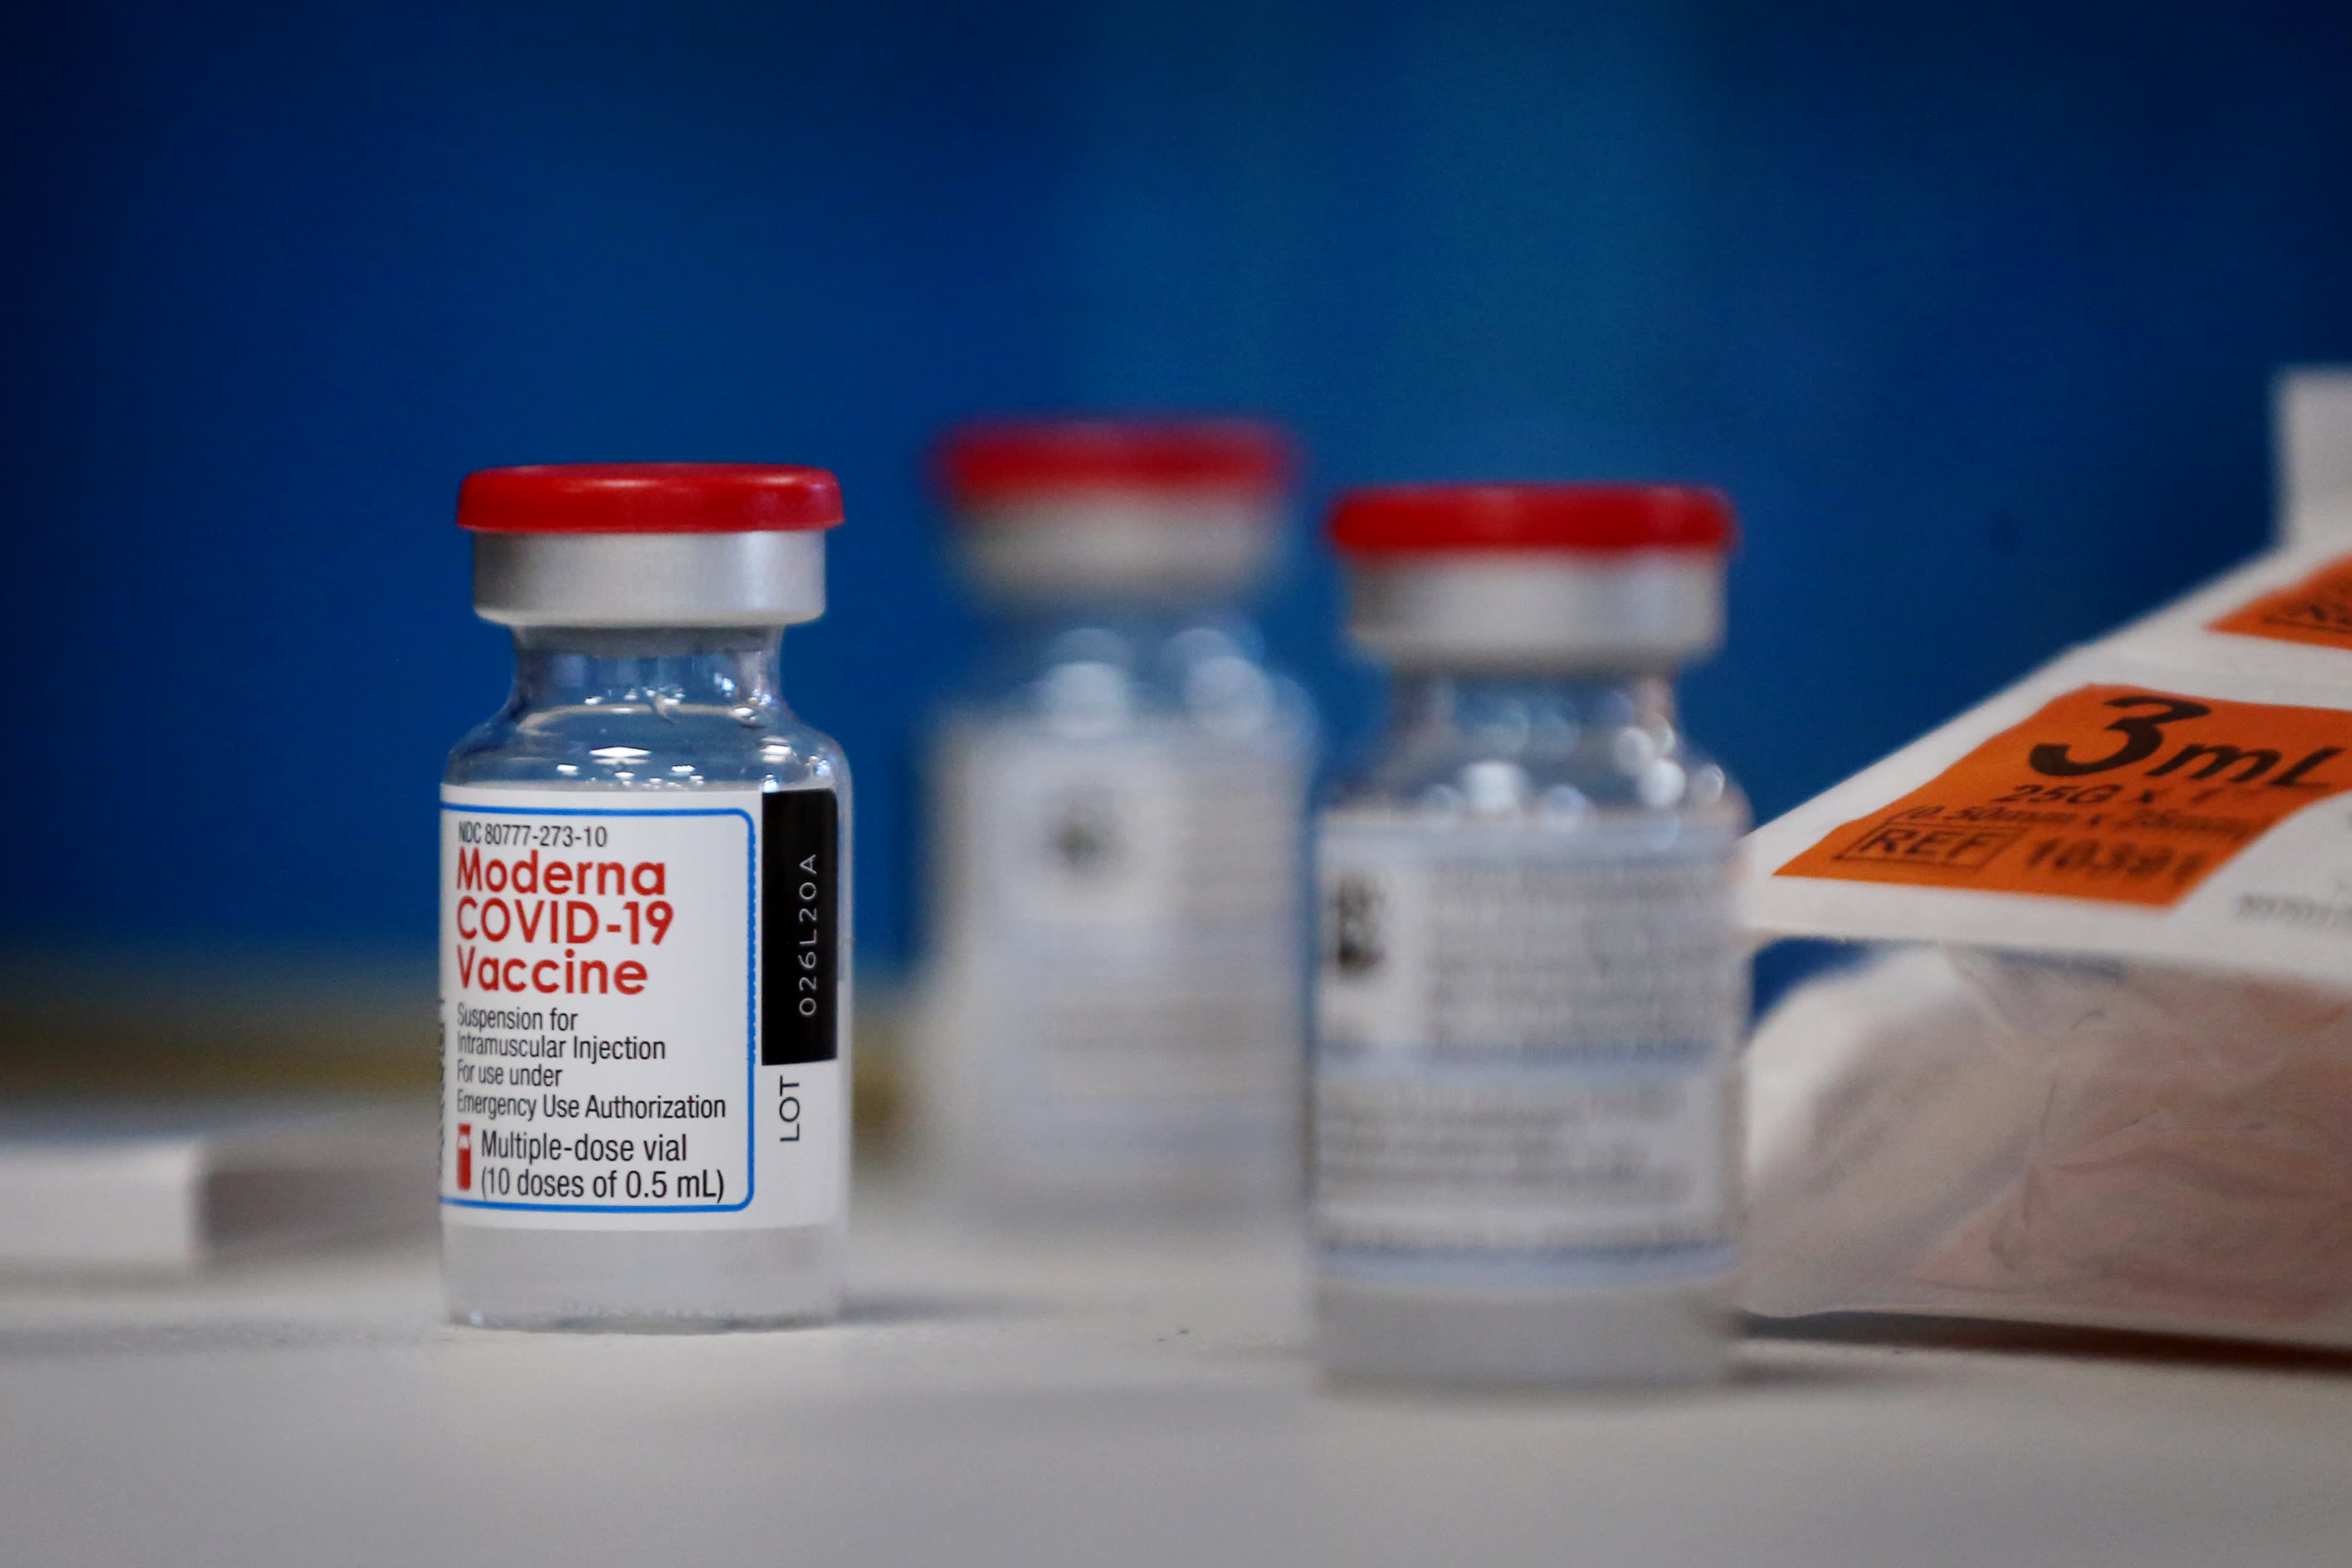 European regulator approves Moderna Covid vaccine for use in the EU